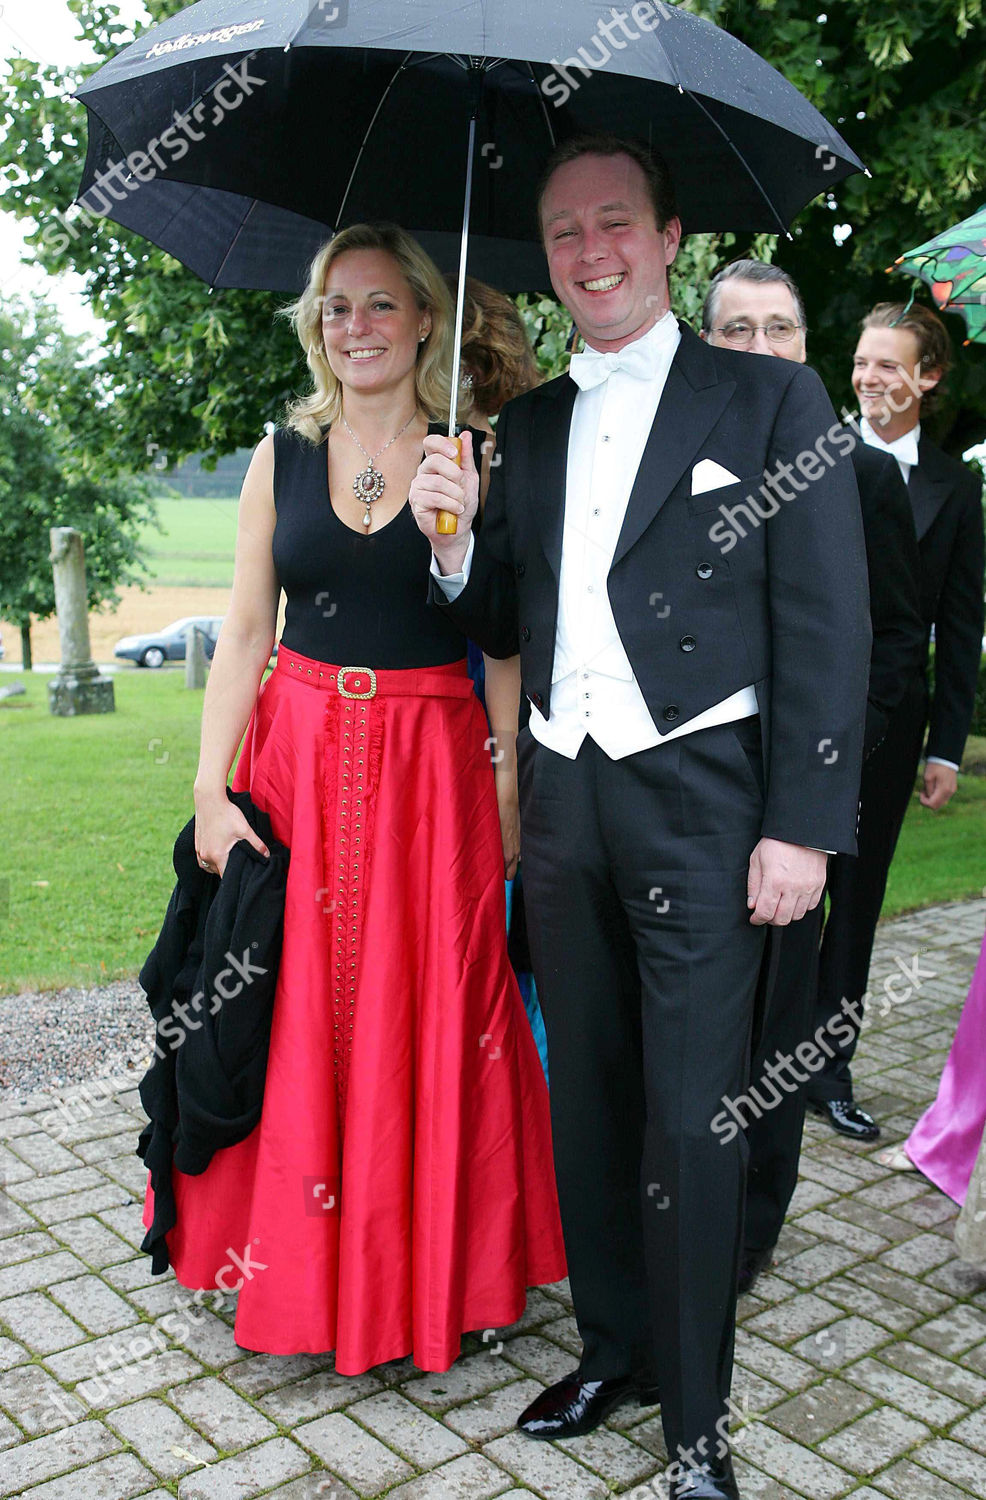 https://editorial01.shutterstock.com/wm-preview-1500/538876n/eddaffa3/the-wedding-of-princess-anna-of-sayn-wittgenstein-berleburg-and-prince-manuel-of-bavaria-in-stigtoma-near-nykoeping-sweden-shutterstock-editorial-538876n.jpg